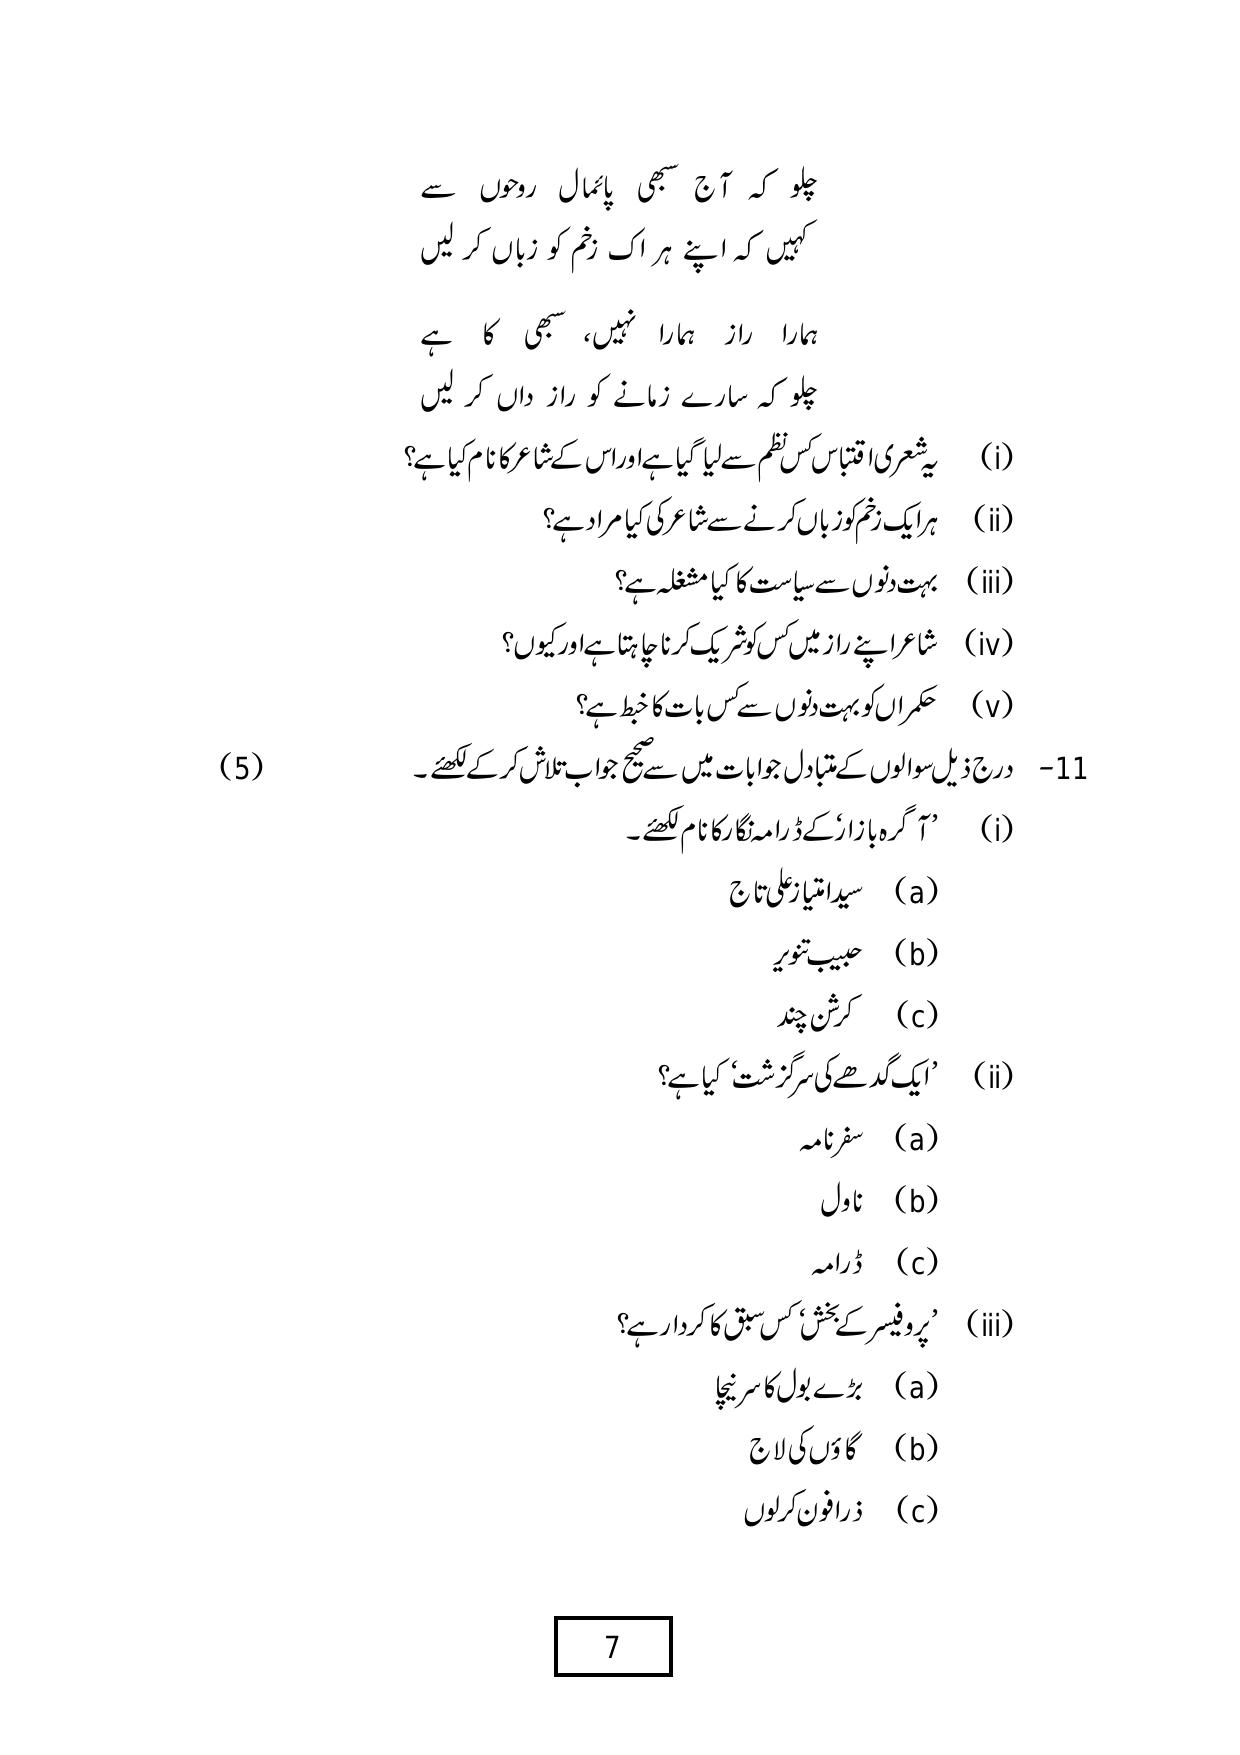 CBSE Class 12 Urdu Core -Sample Paper 2019-20 - Page 7